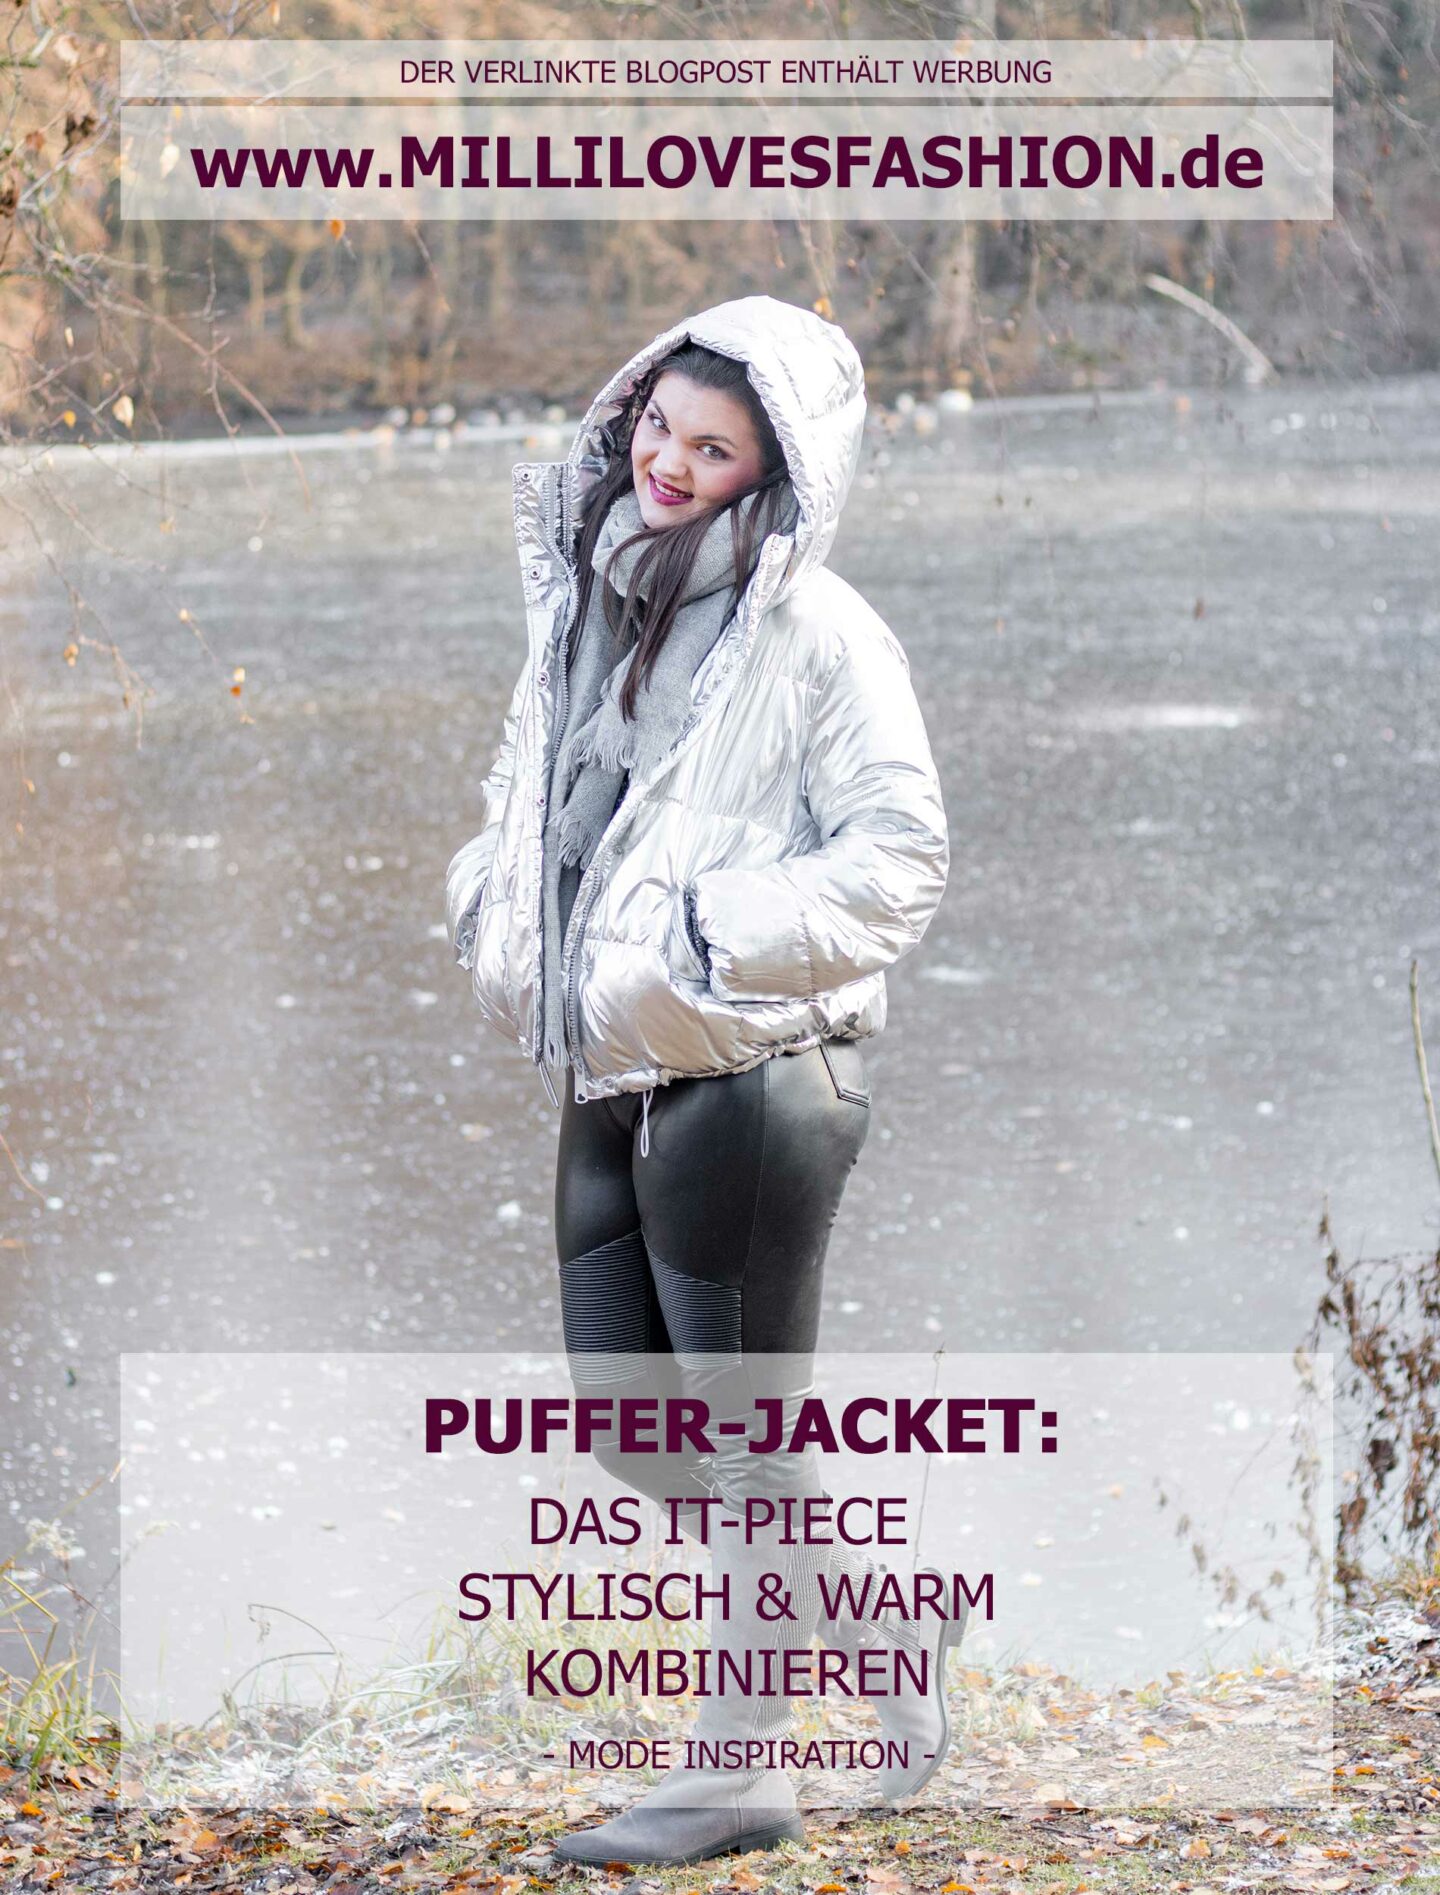 Den Modetrend Pufferjacket im Winter stylen